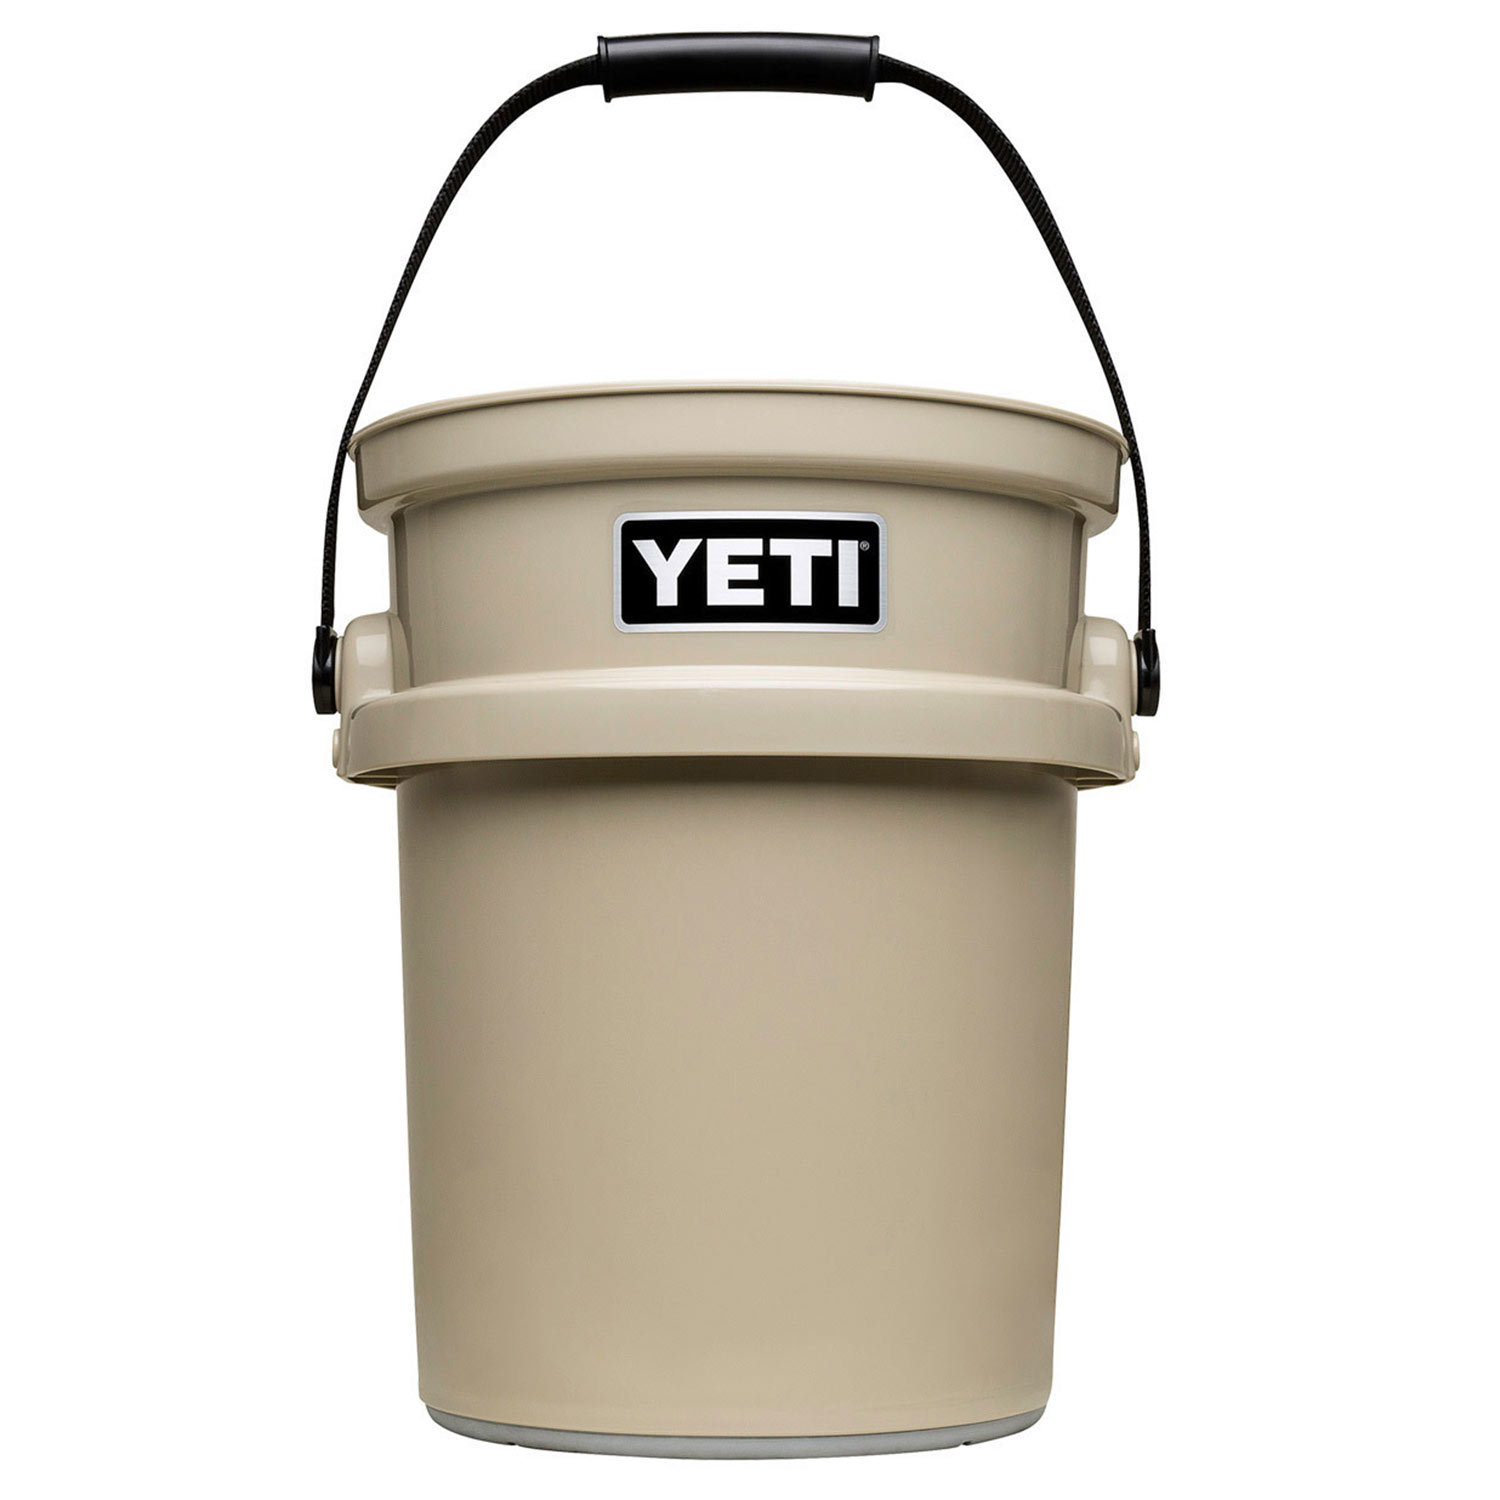 Yeti Bucket - The West Coast Fishing Club